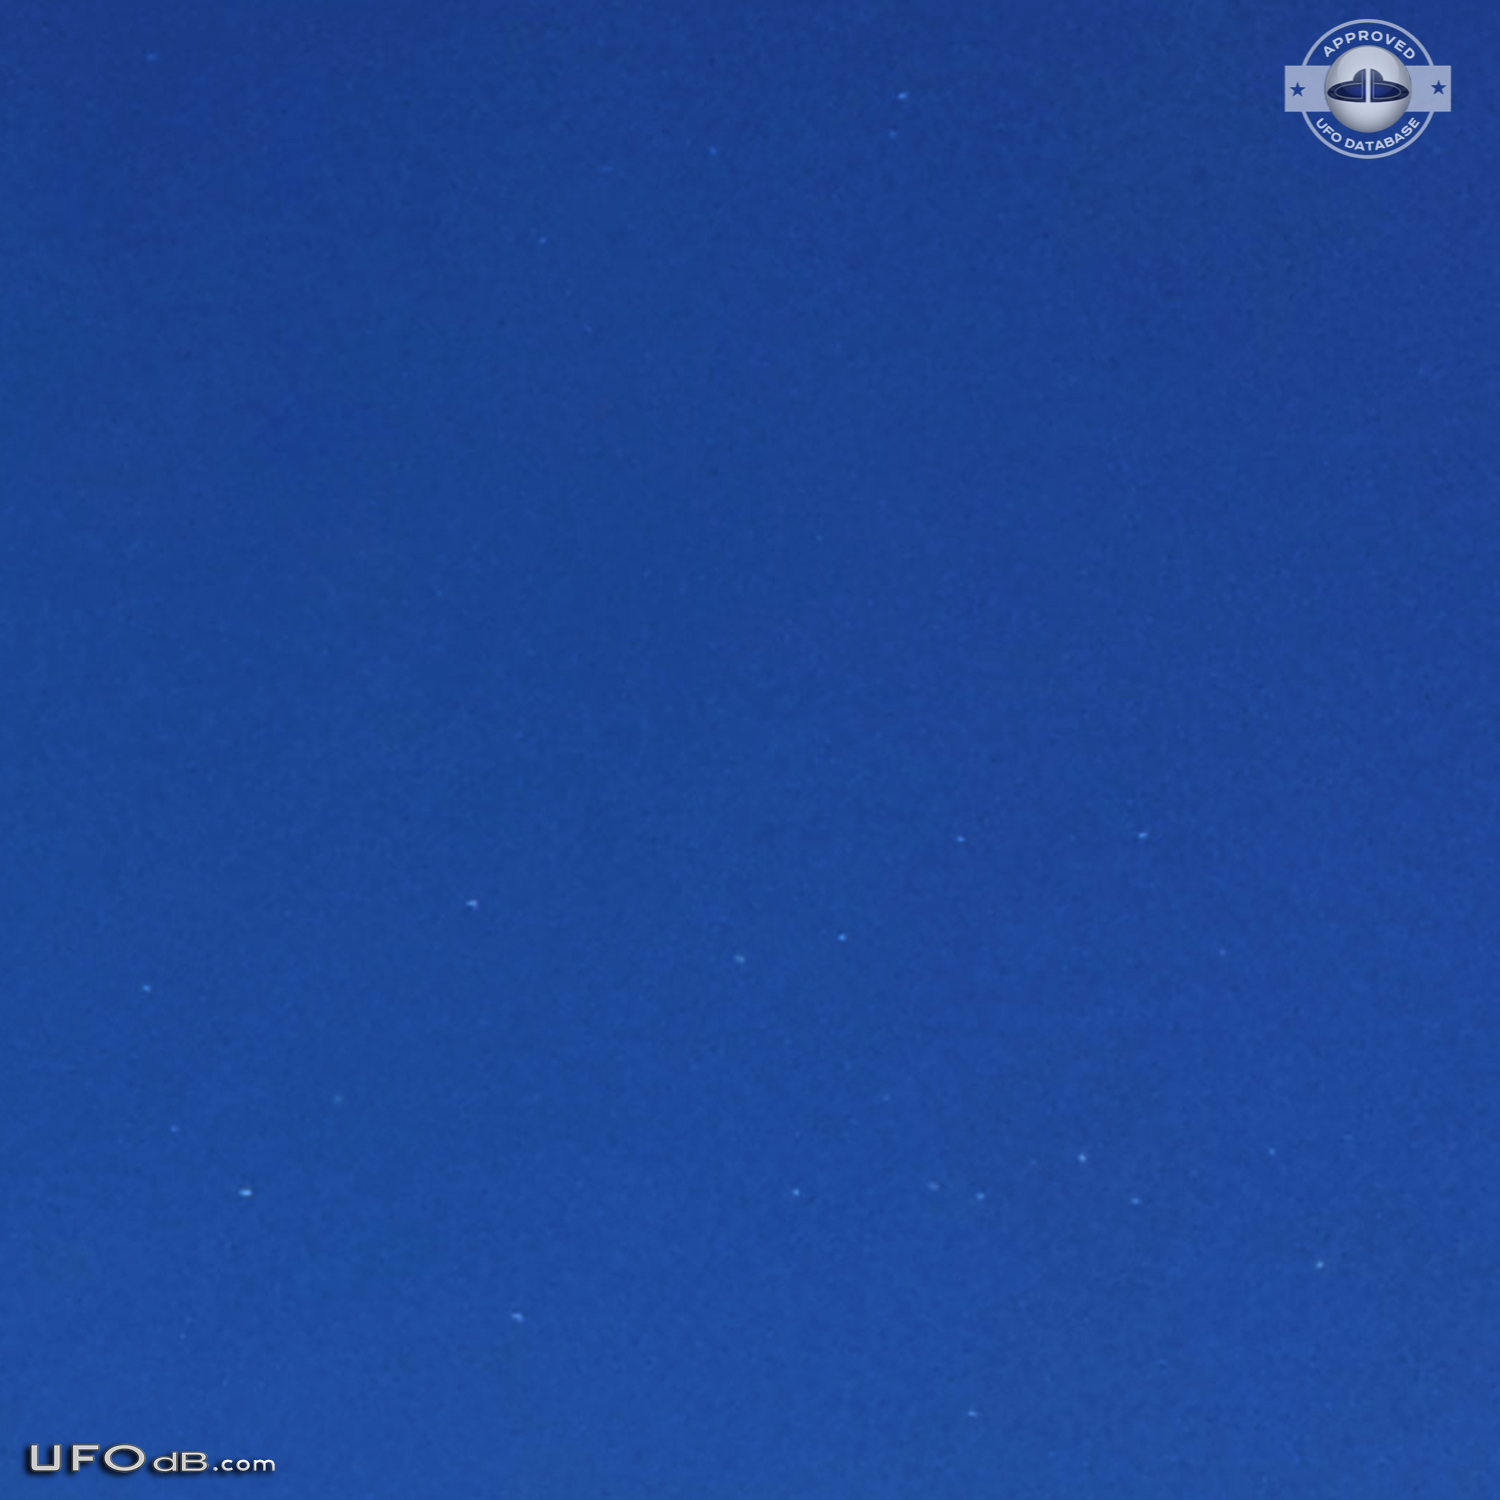 Fleet of UFOs in the blue sky - photo - San Jose, California - 2012 UFO Picture #404-2